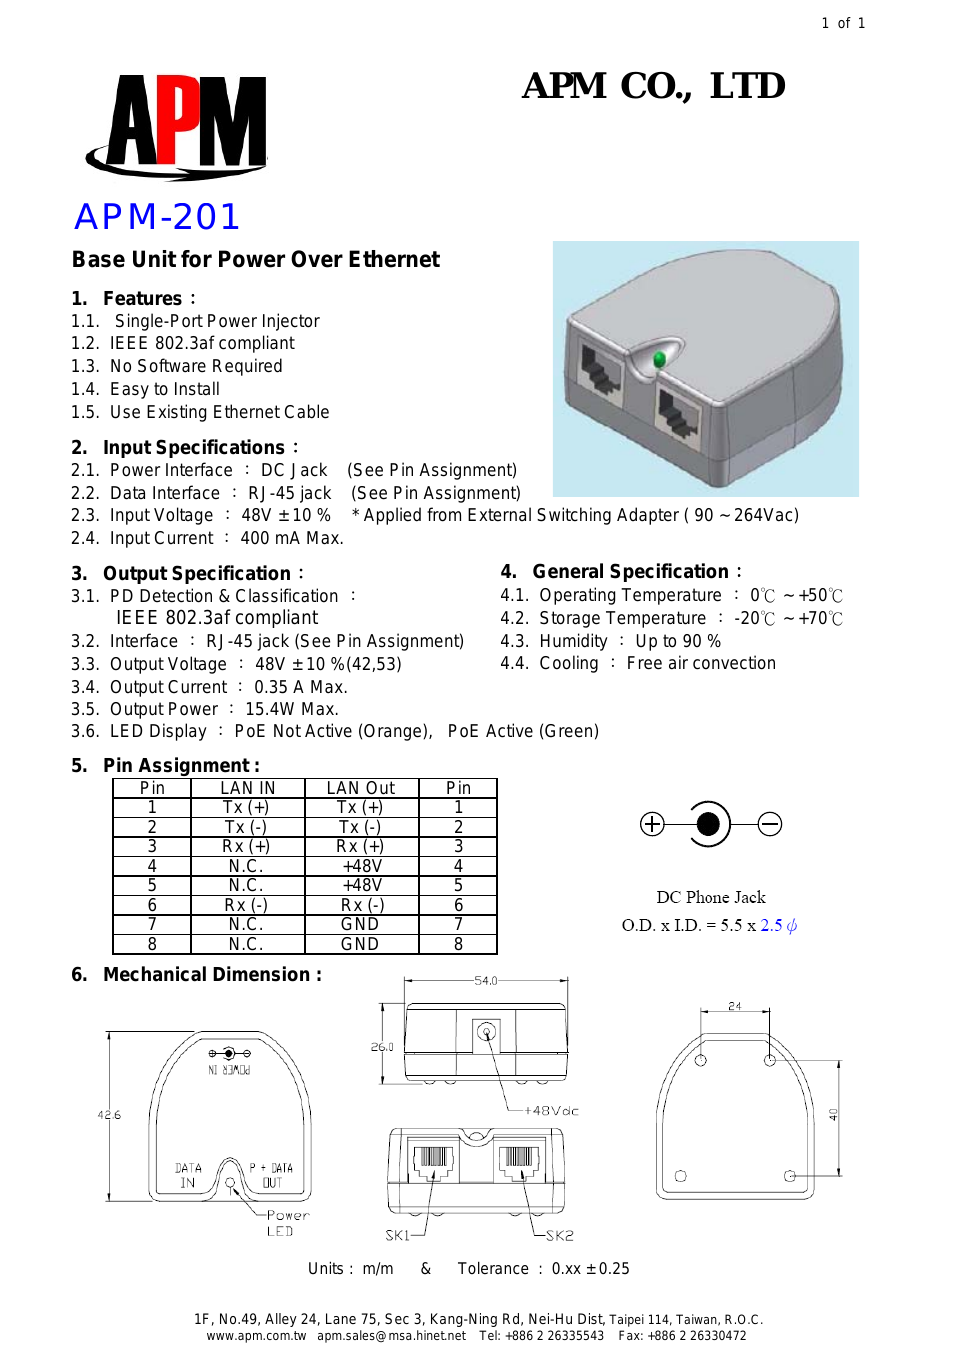 Base Unit for Power Over Ethernet -201